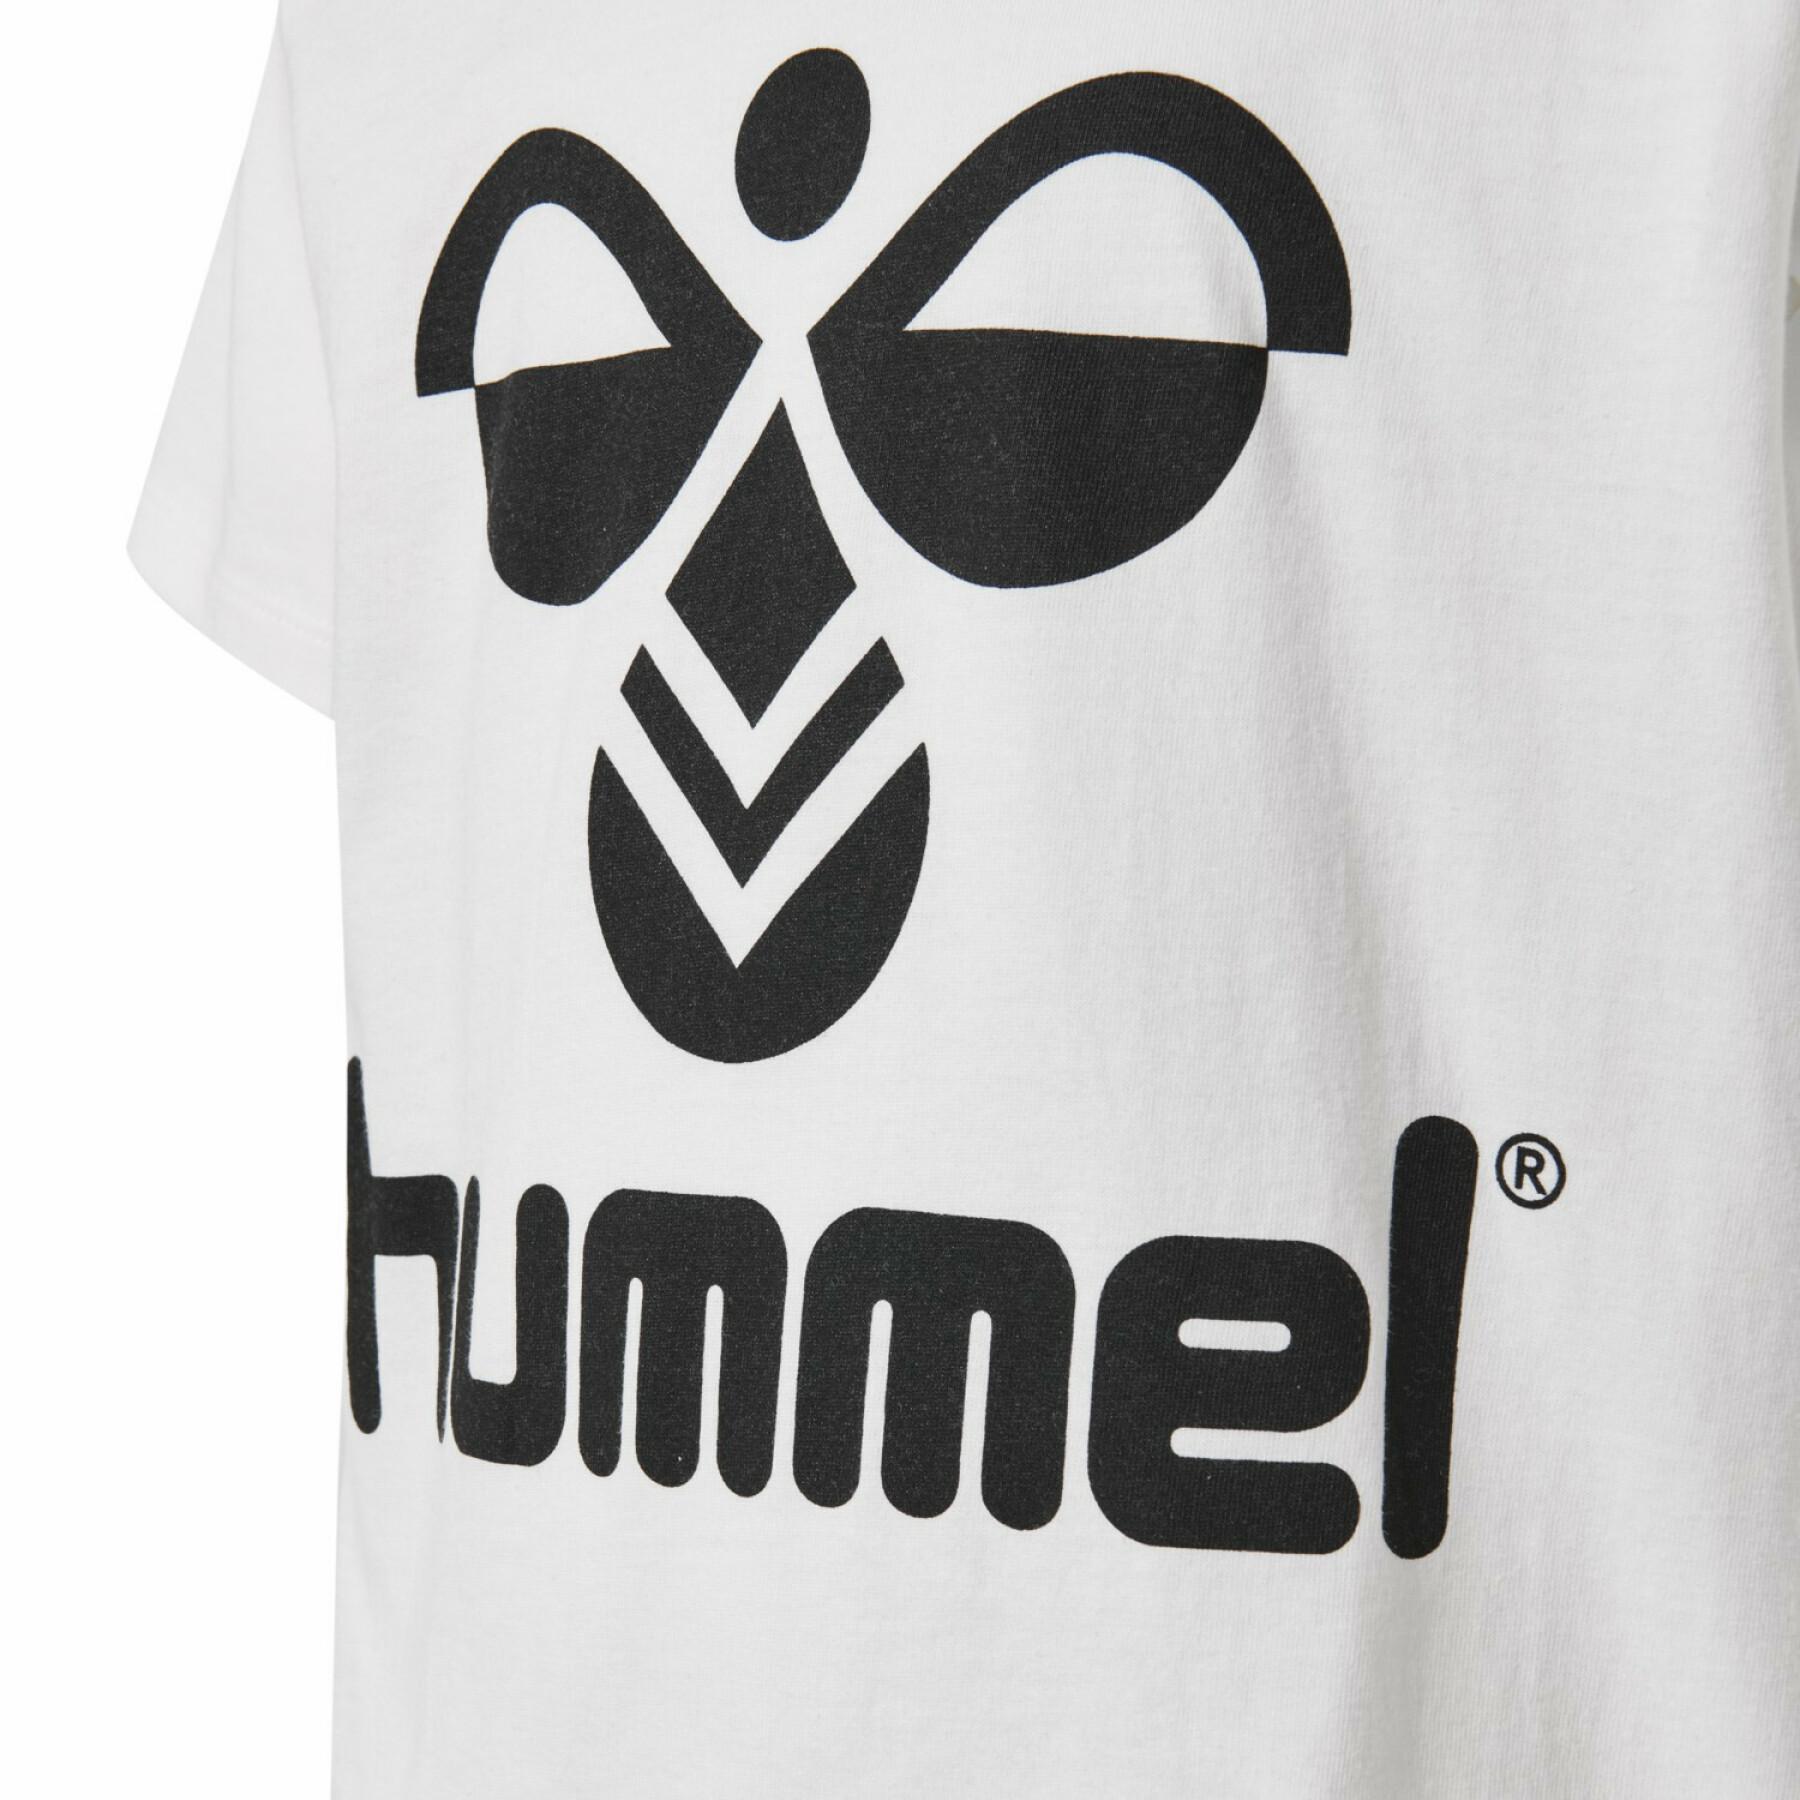 shirts wear volleyball T-shirt polo - hmltres Hummel - Volleyball Kid\'s Women\'s T-shirts et - wear